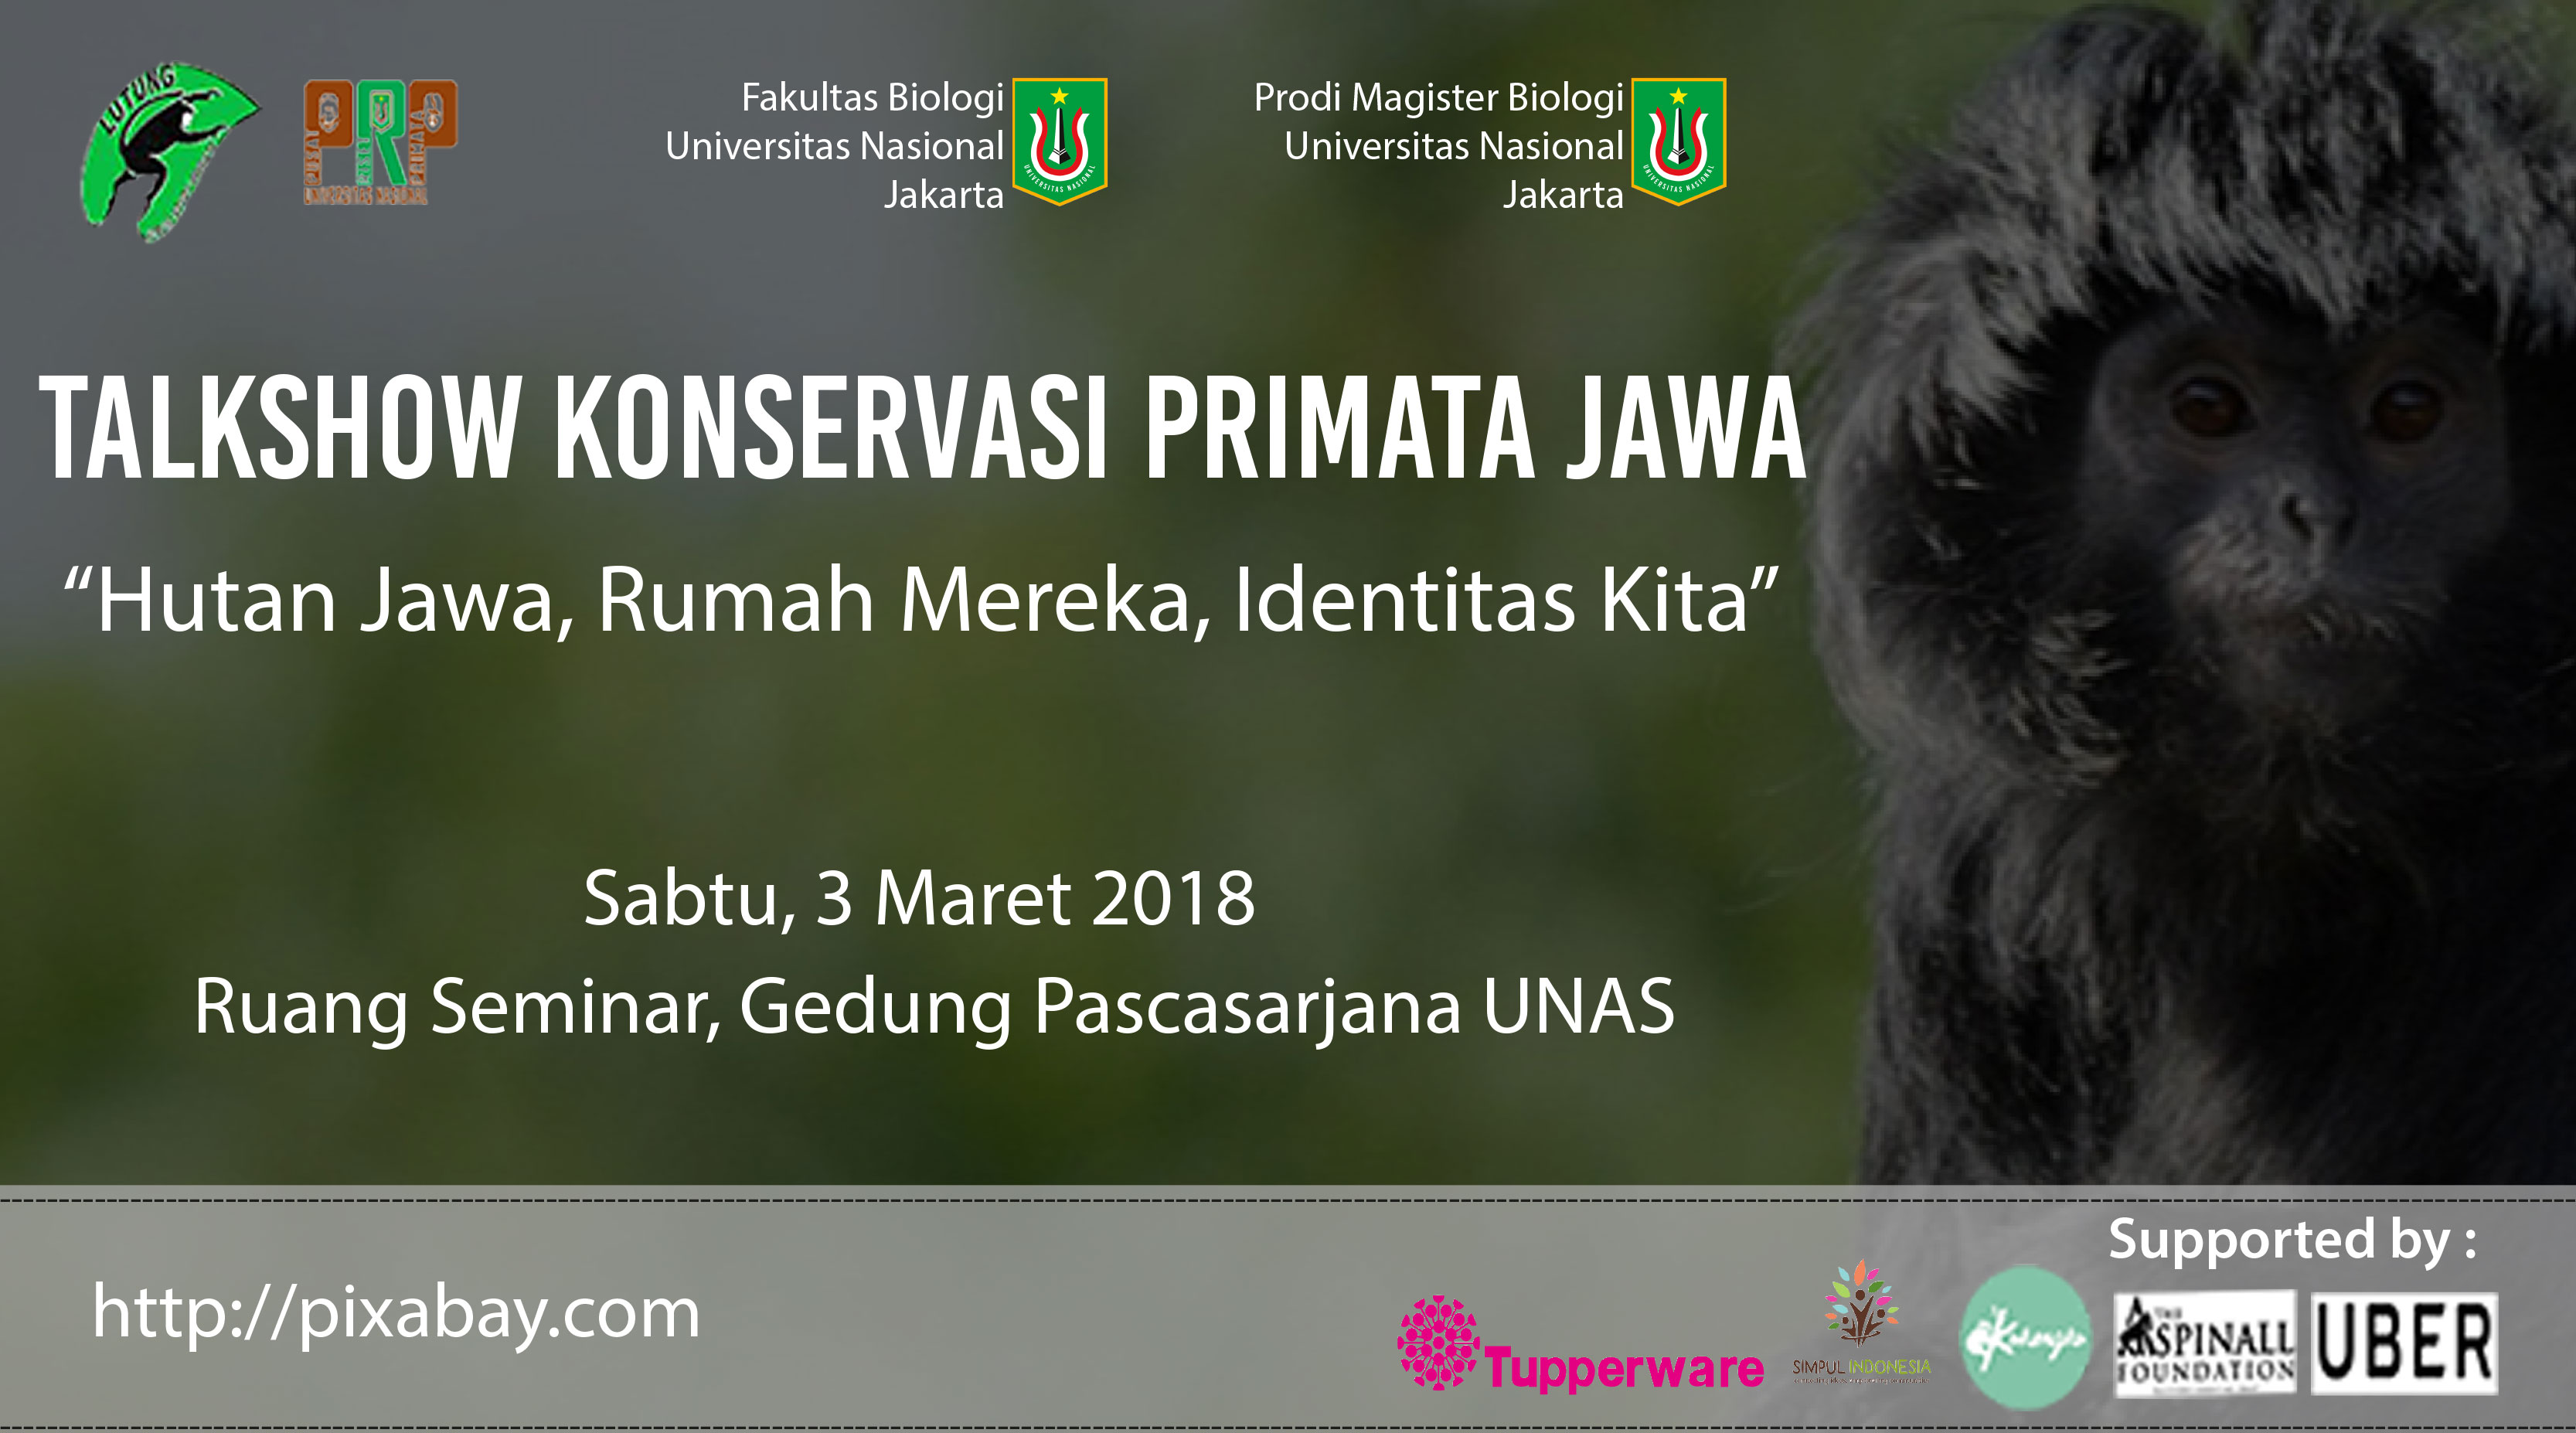 Talkshow Konservasi Talkshow Konservasi Primata Jawa (Program Studi Biologi UNAS) 2018